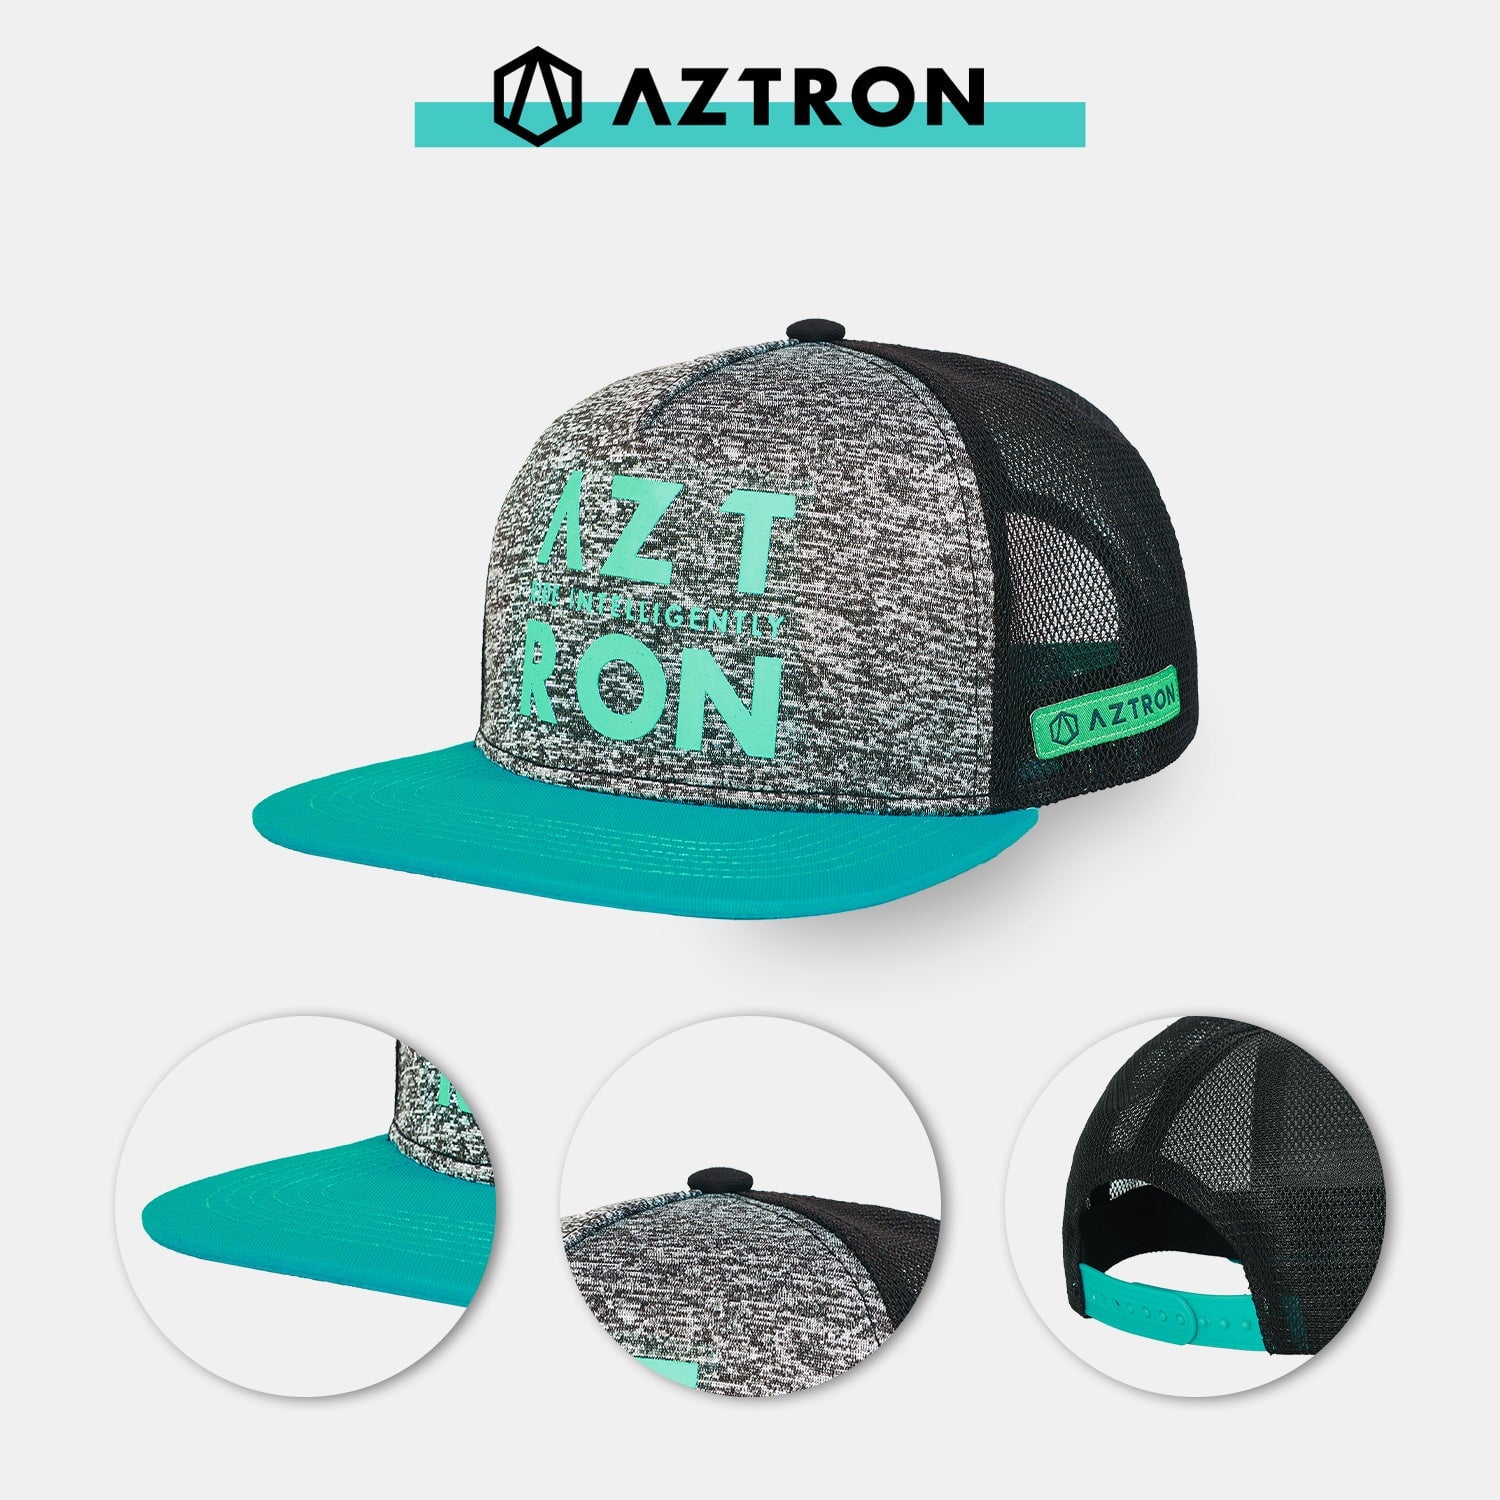 AZTRON Full Logo Cap, Kappe, Baseball Cap, SUP Cap, Trucker Cap